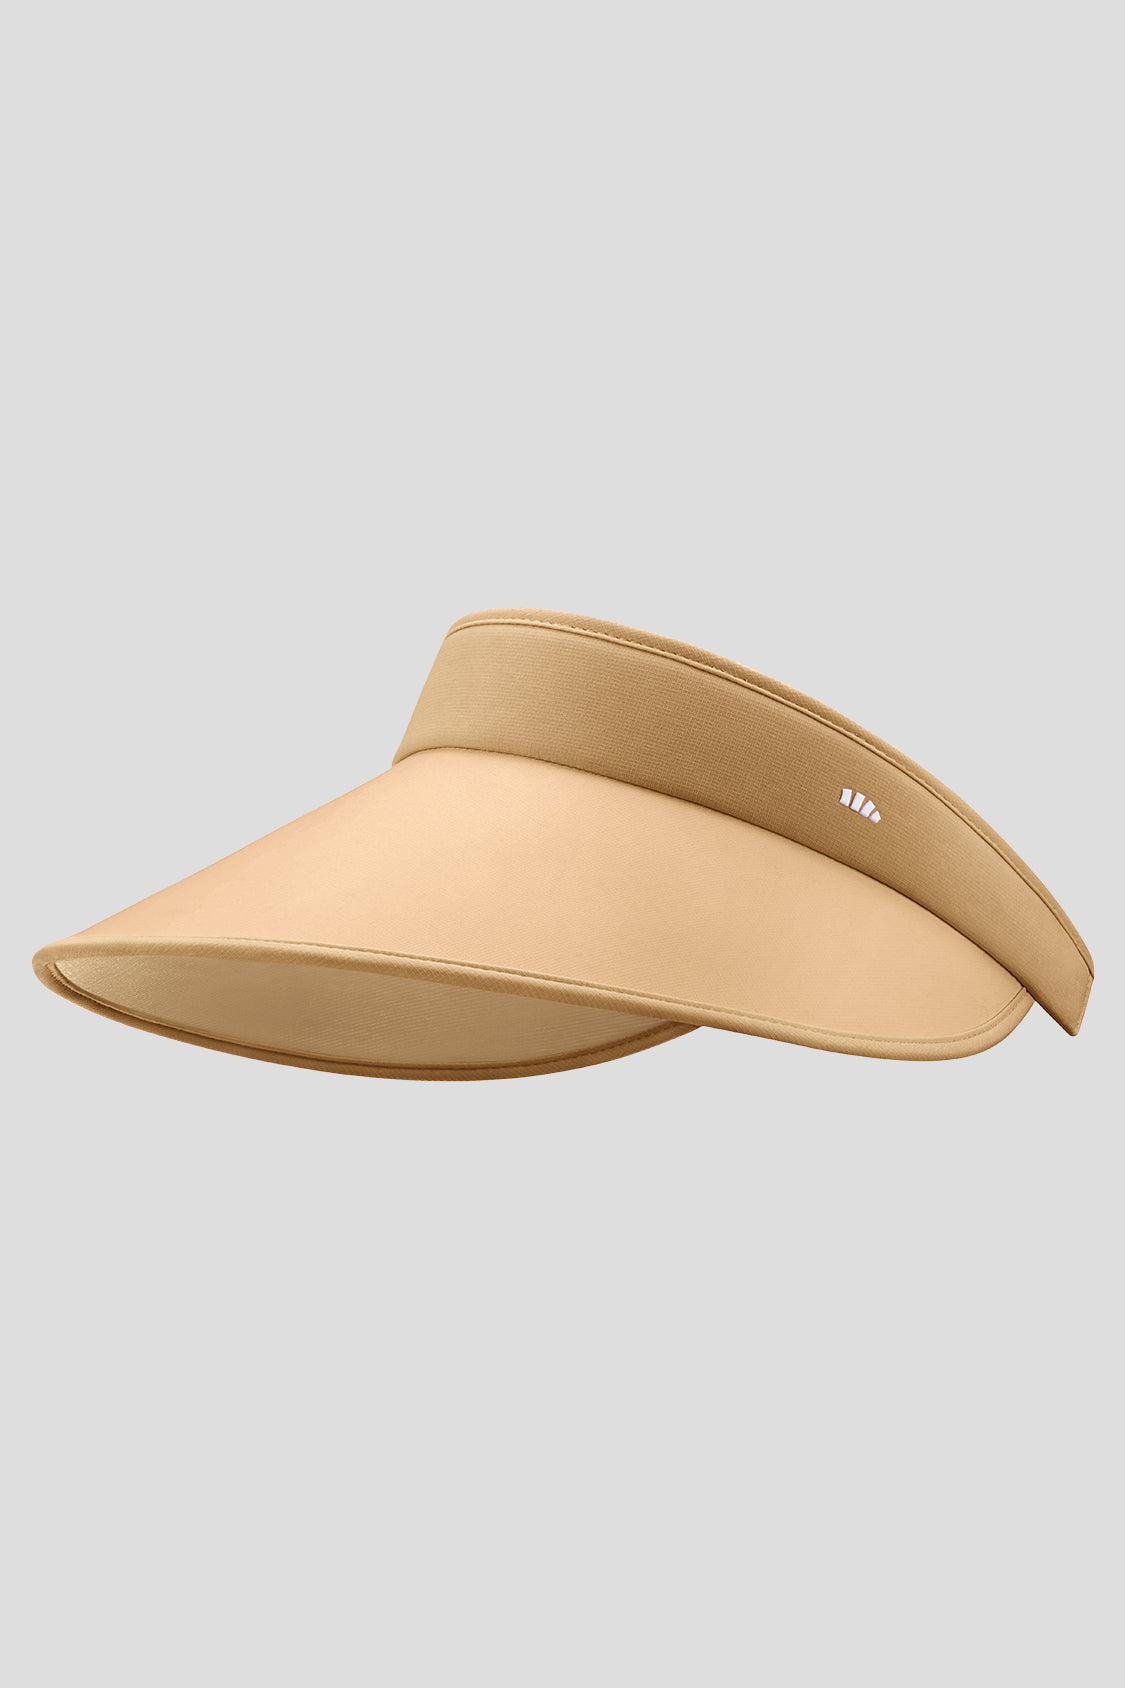 Guji Wide - Women's Sun Visor Hat UPF50+ One Size - Adjustable 55-58cm / Black